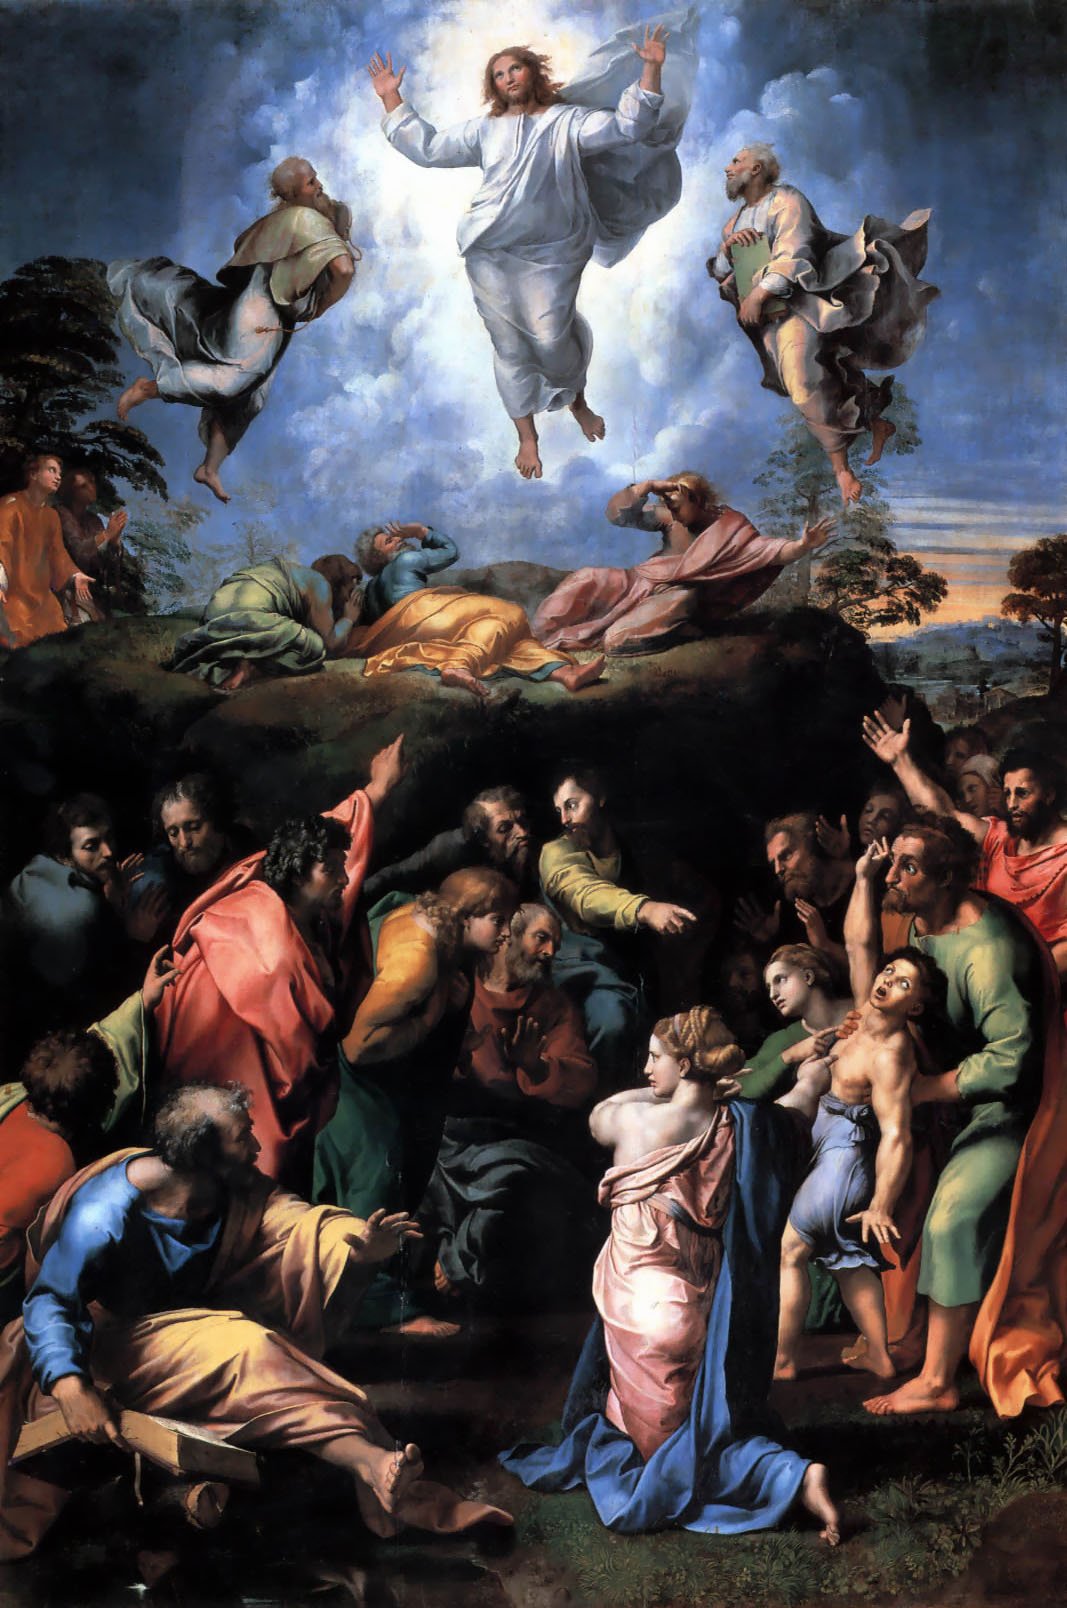 Raphael’s Transfiguration